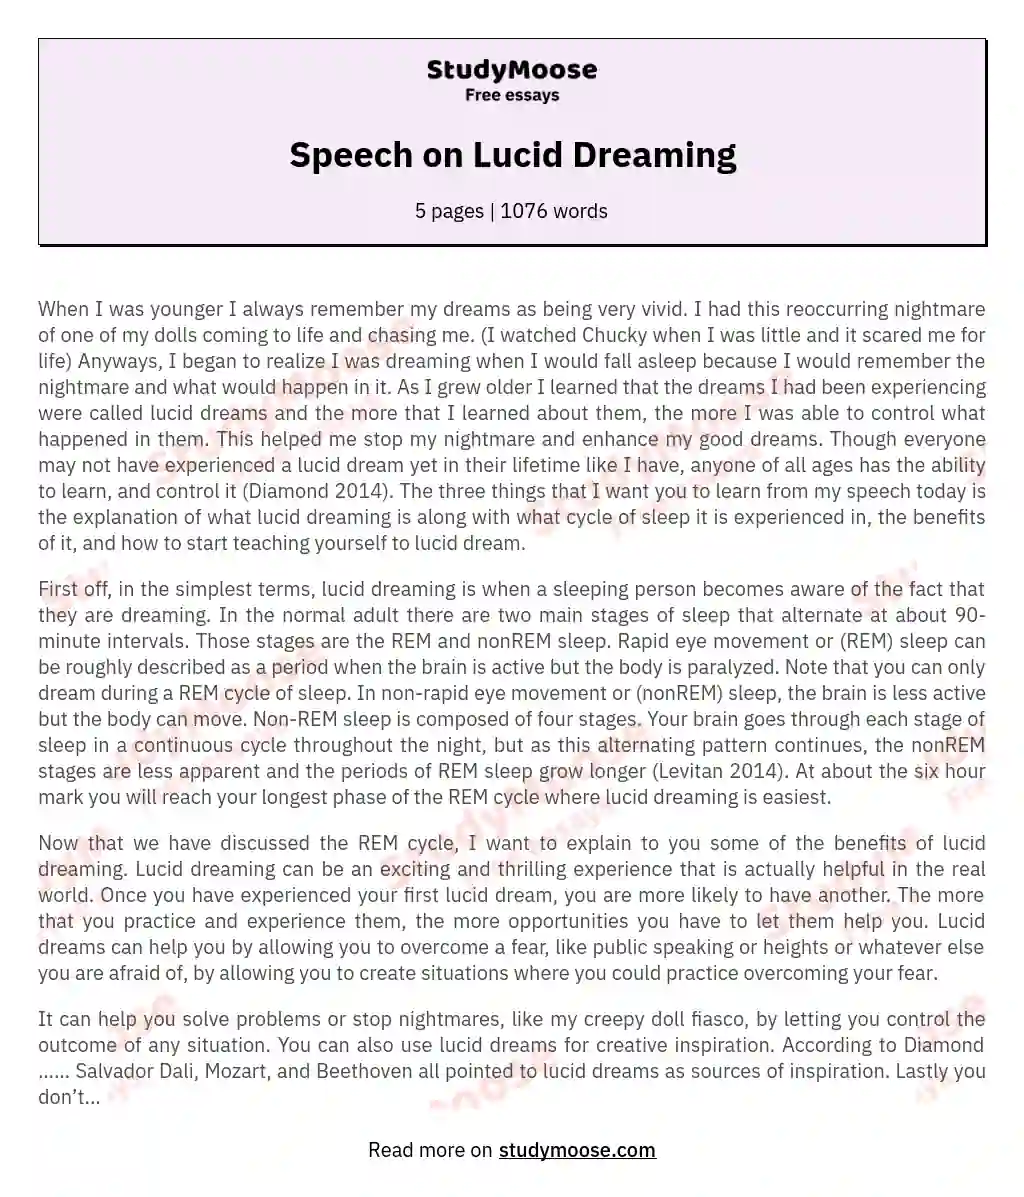 Speech on Lucid Dreaming essay